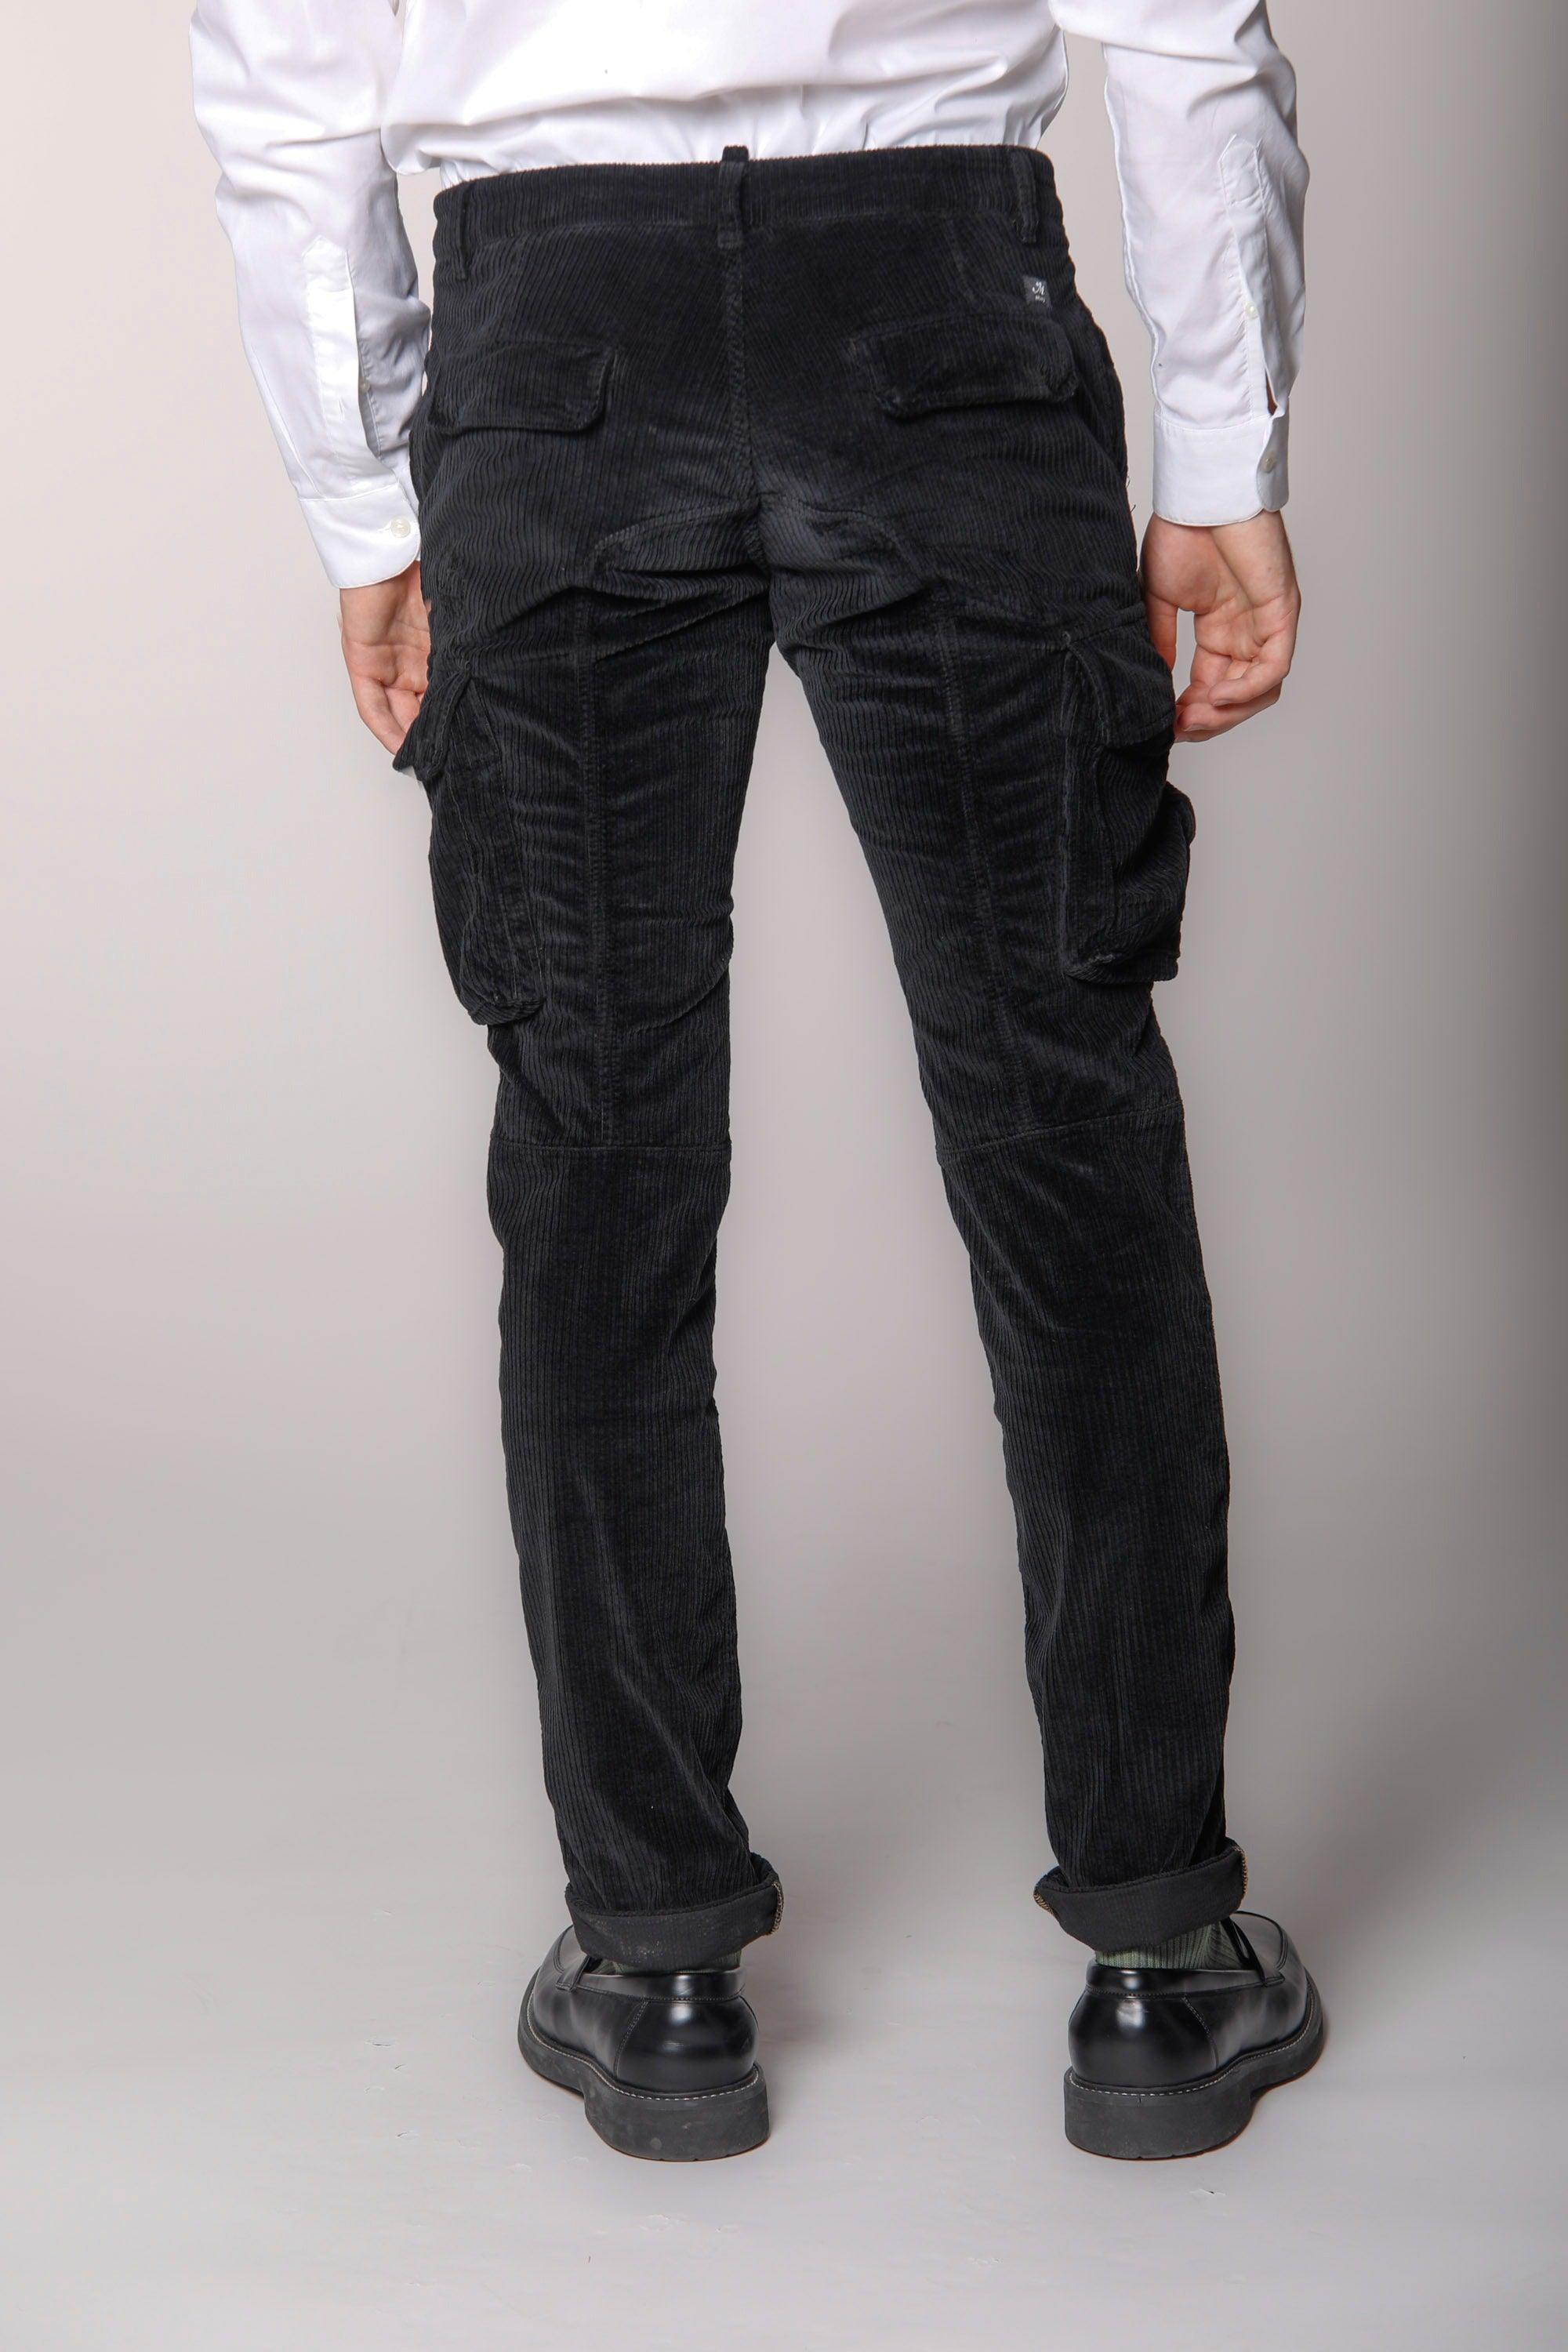 Chile pantalone cargo uomo in velluto 500 righe extra slim fit